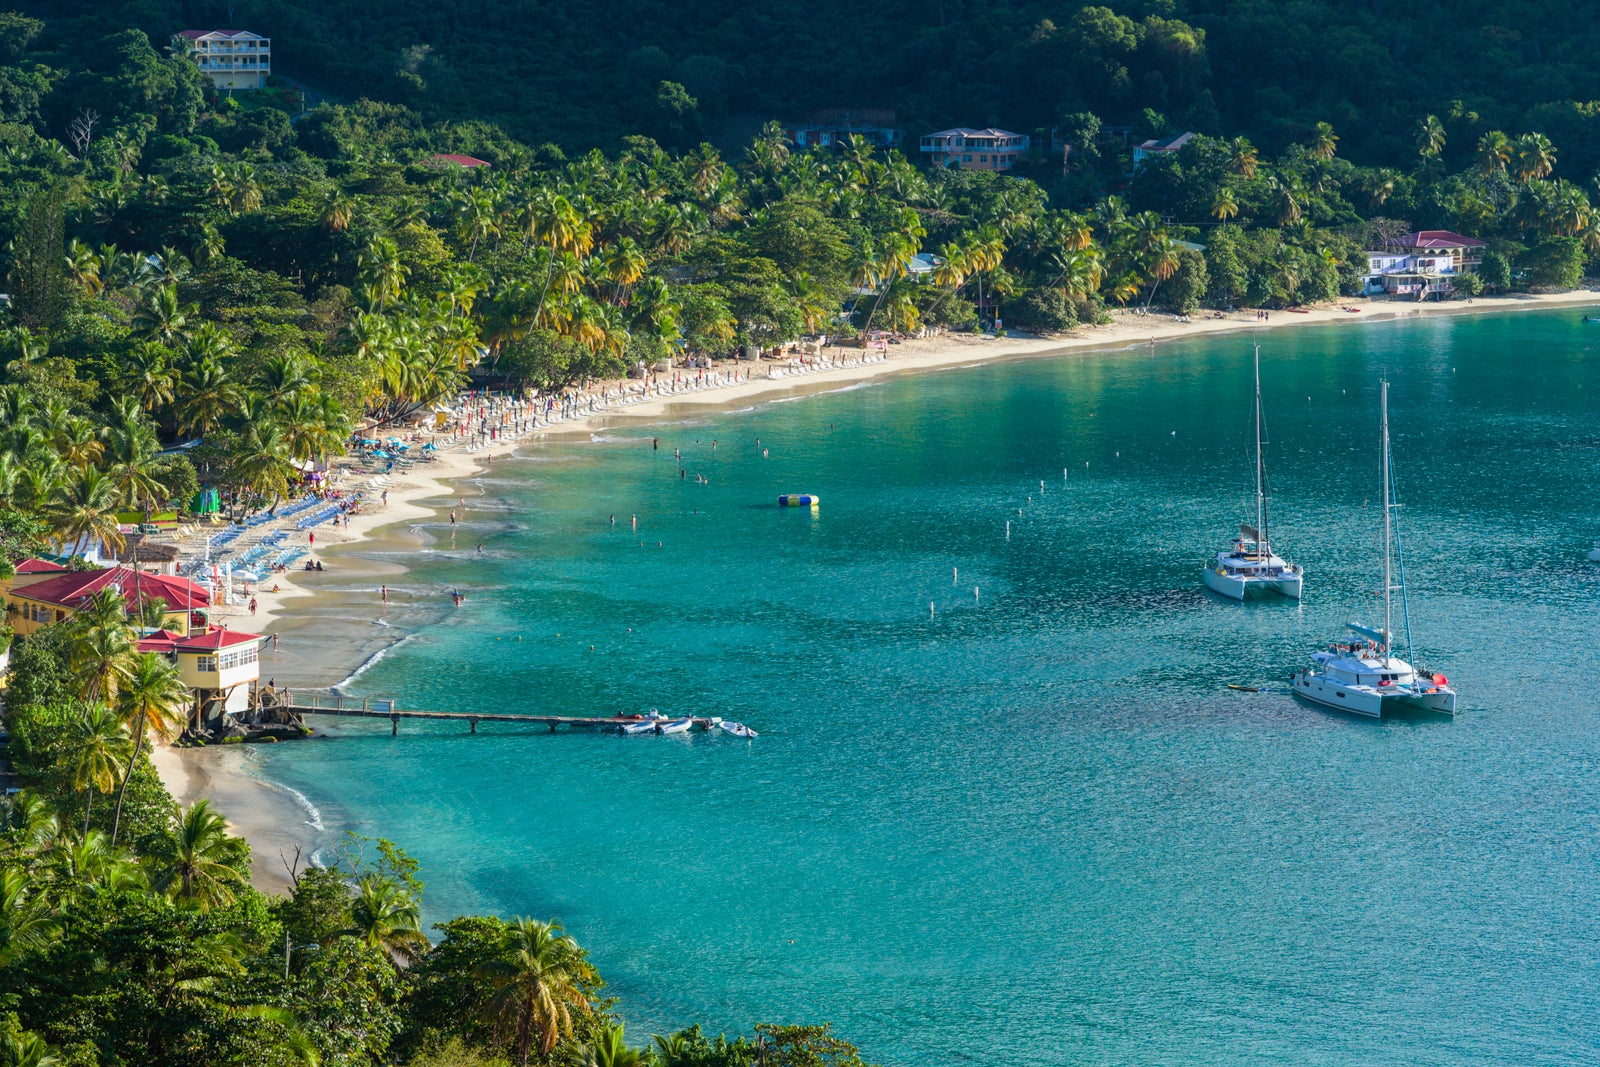 Landscape of the island of Tortola in the British Virgin Islands